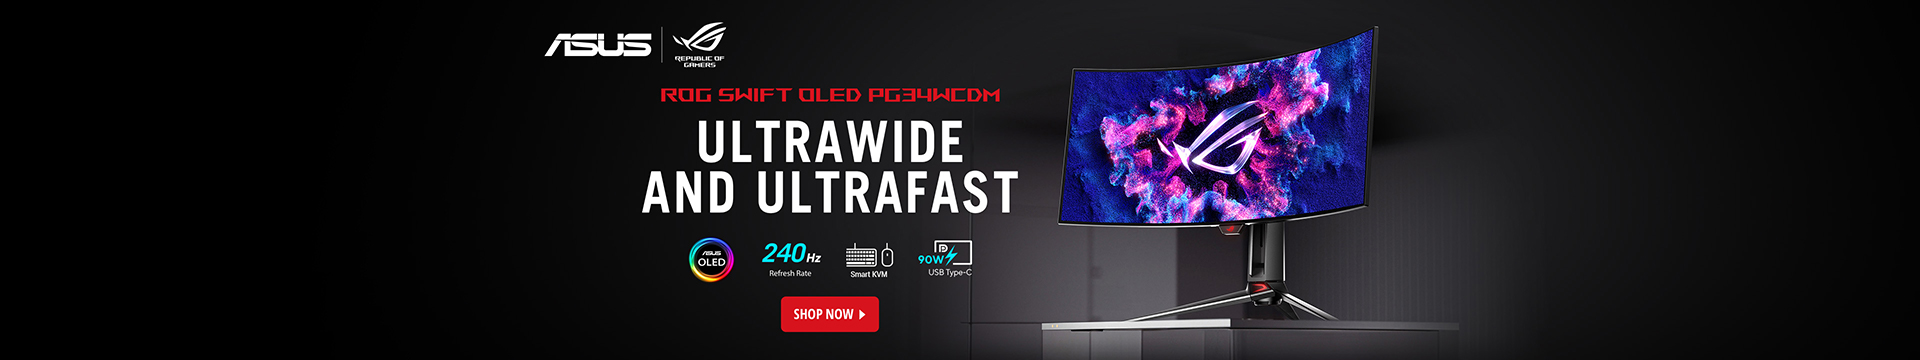 Ultrawide and Ultrafast